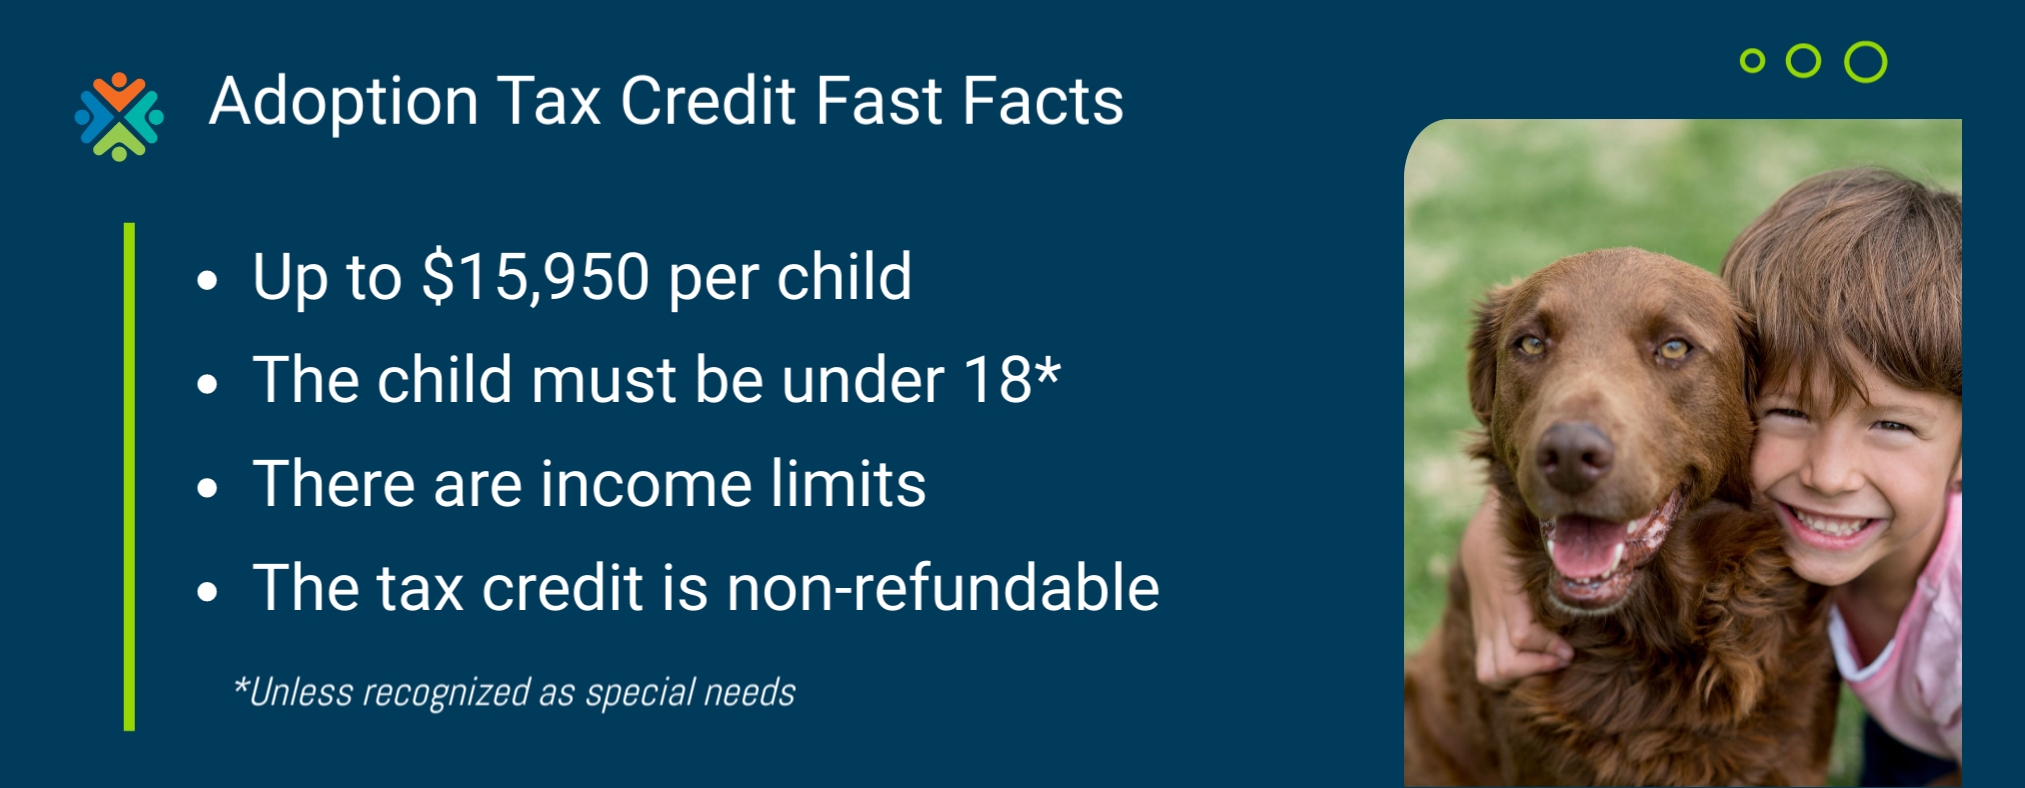 adoption tax credit facts